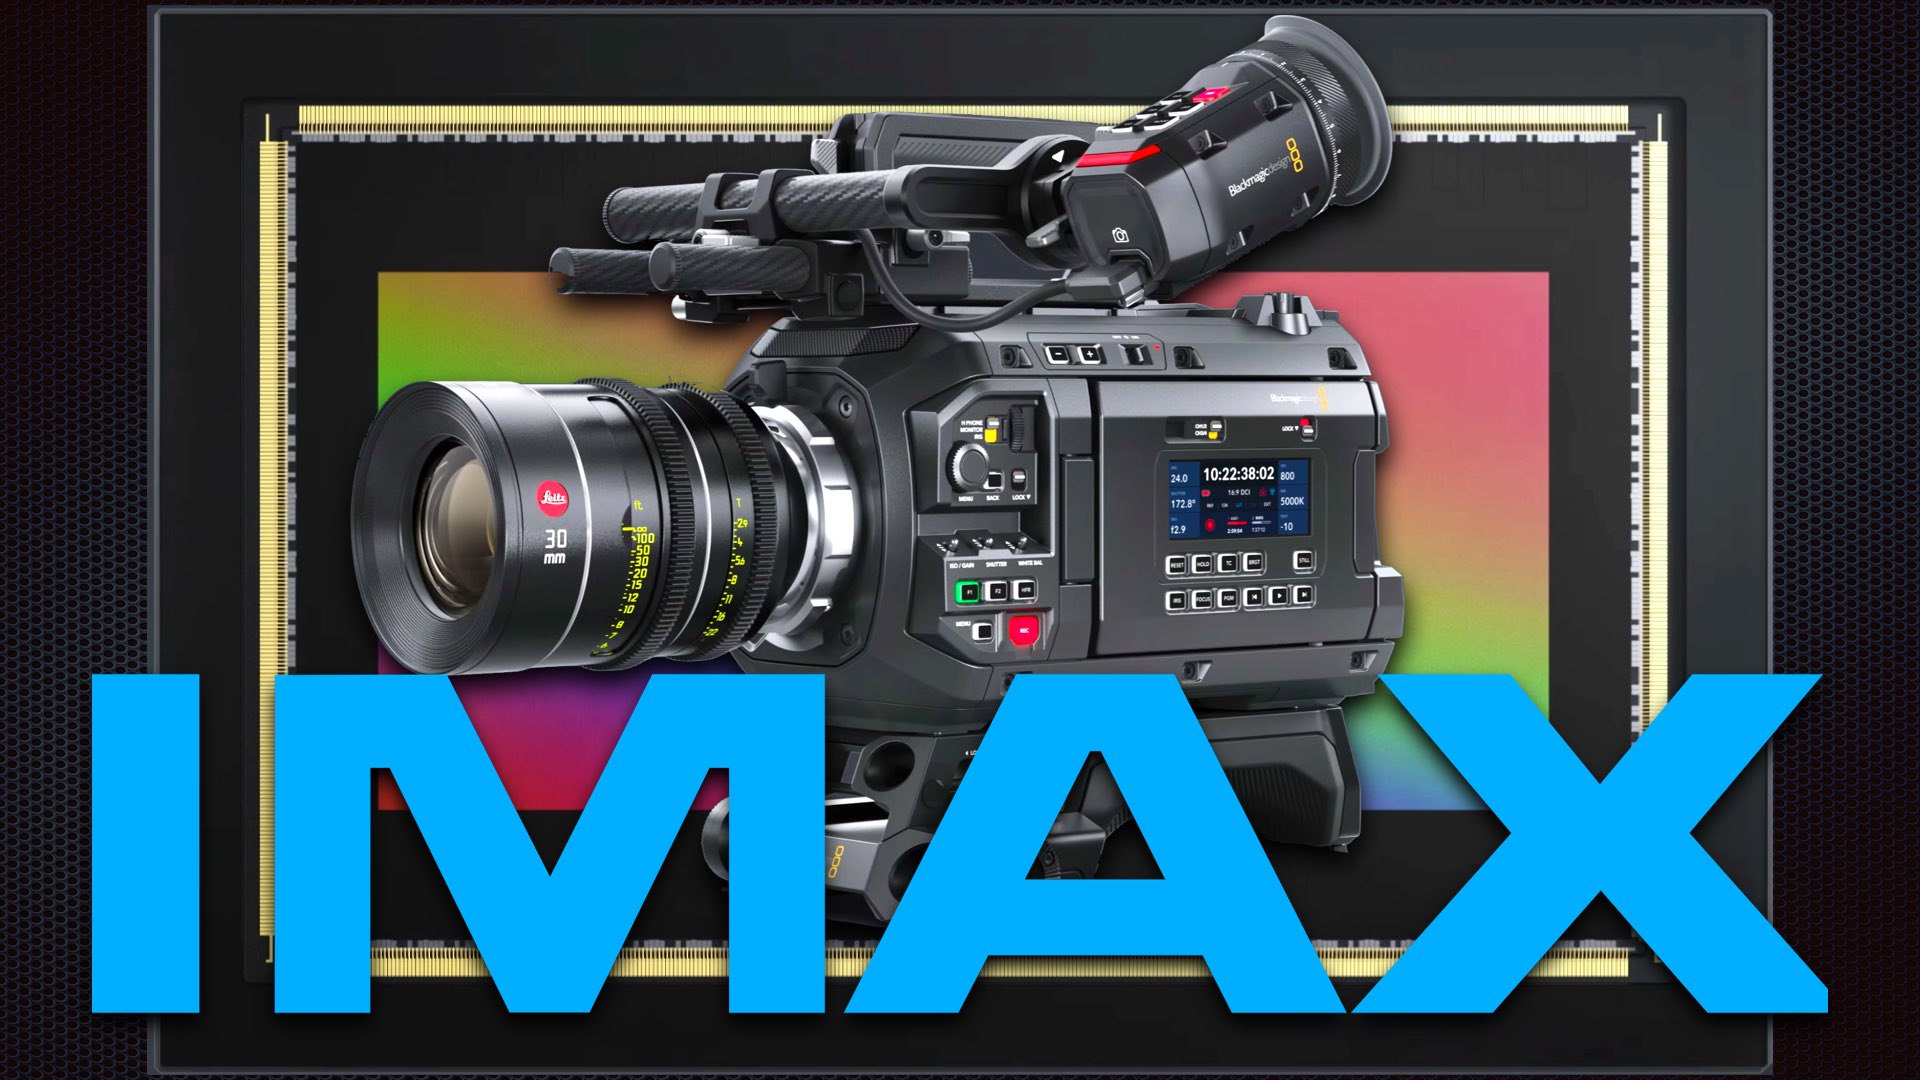 URSA Cine 17K: Bringing IMAX filmmaking to the Masses